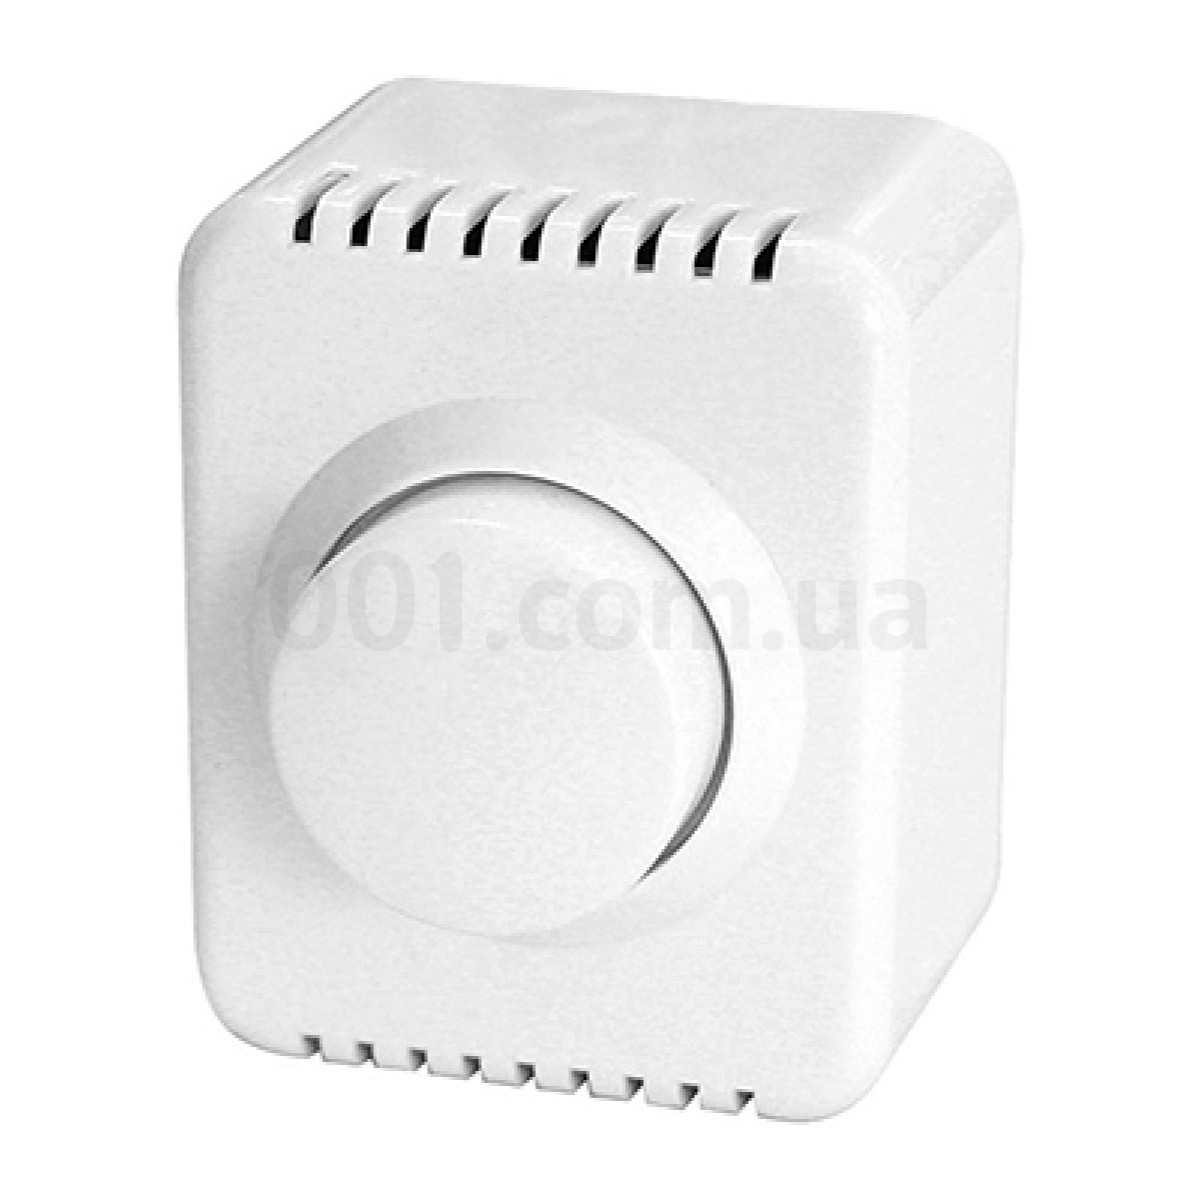 Светорегулятор (диммер) 500 Вт (блистерная упаковка) белый e.touch.1311.w.blister серия e.touch, E.NEXT 256_256.jpg